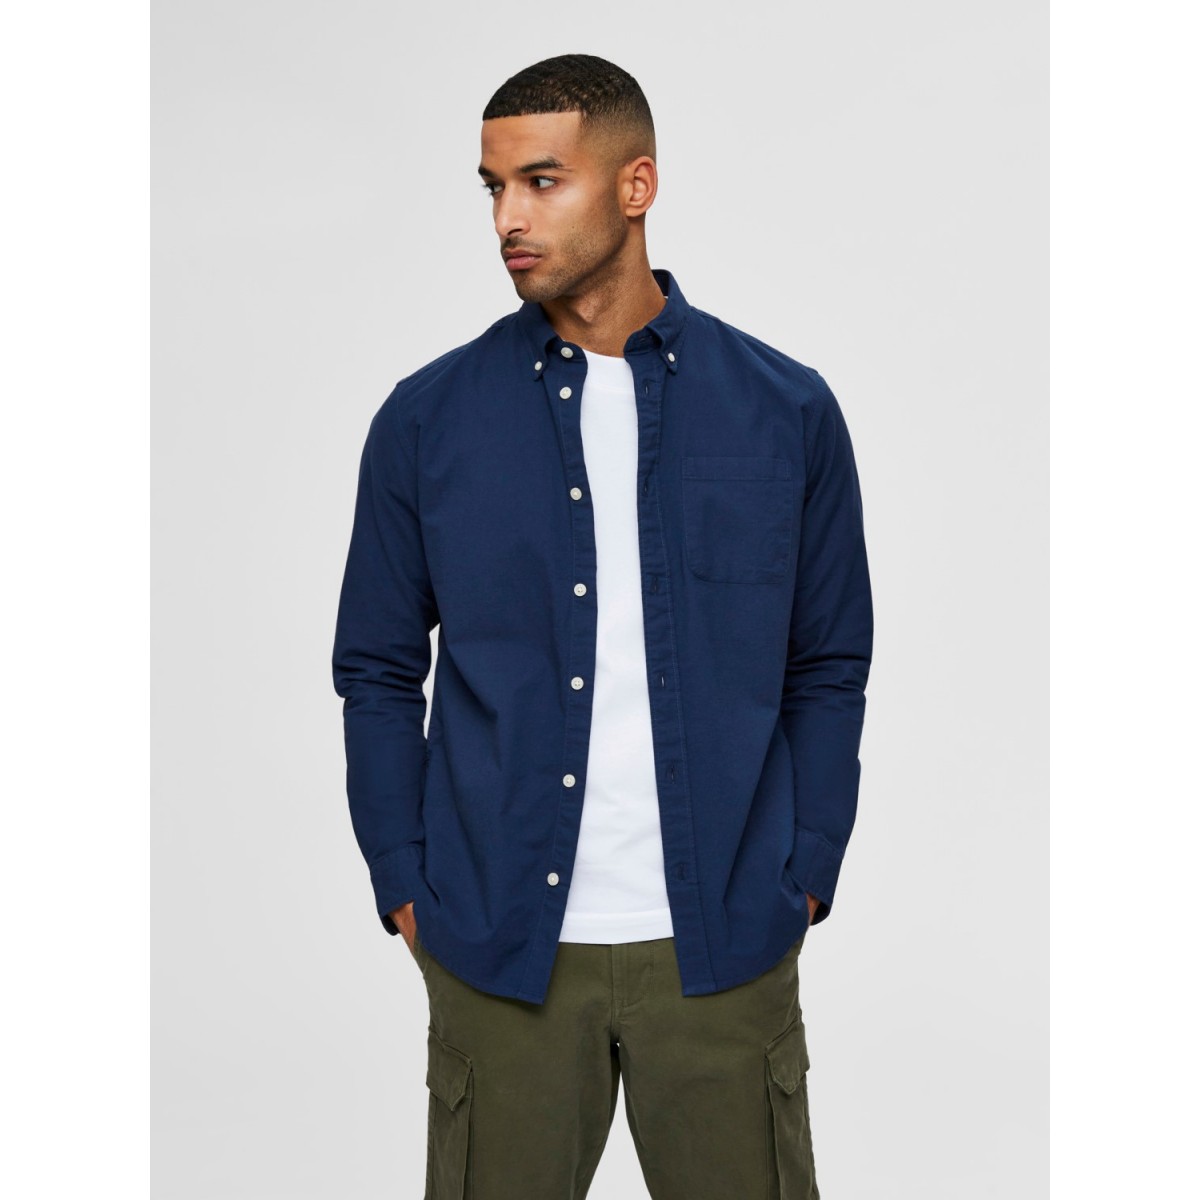 Selected Homme - Veste chemise habillée en sergé - Bleu marine